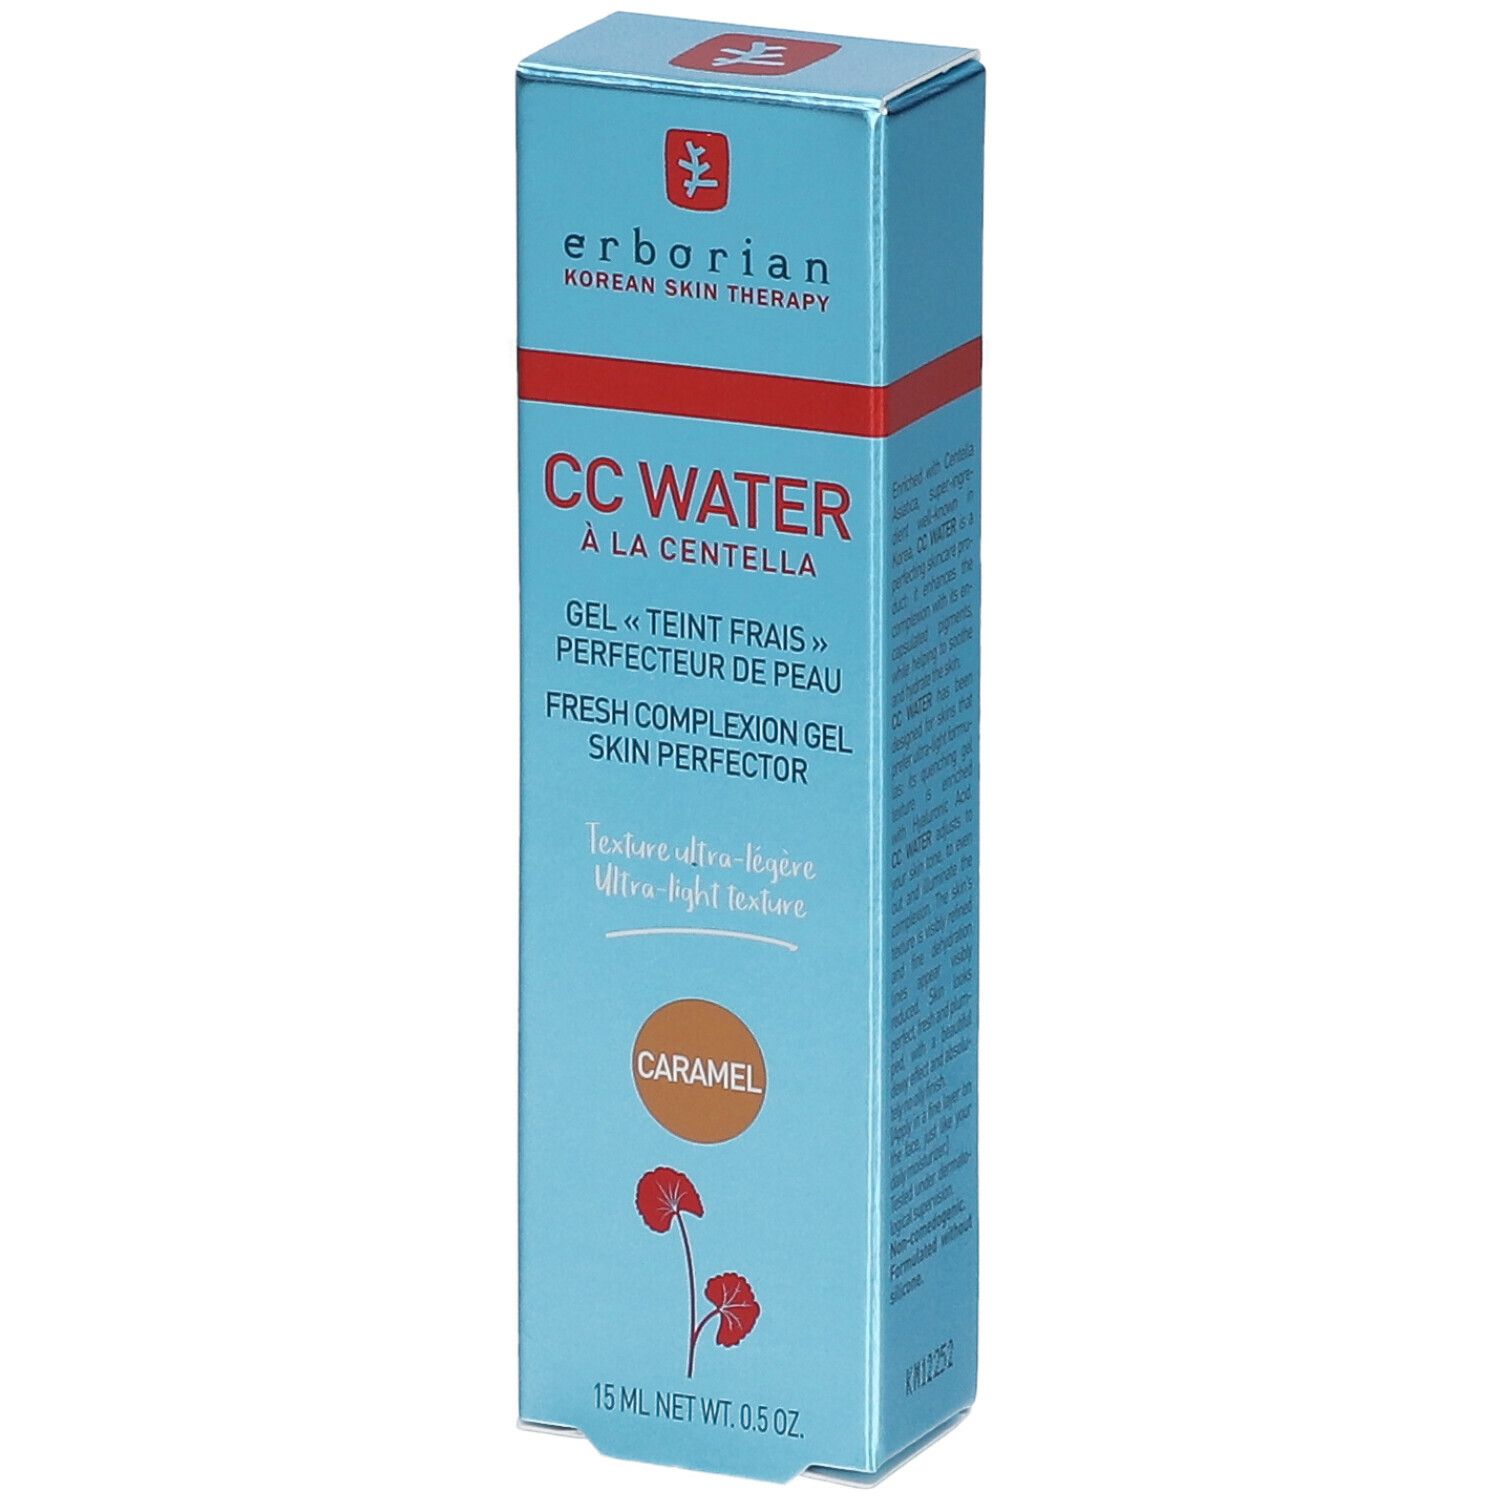 erborian CC Water Caramel - Perfecteur de peau